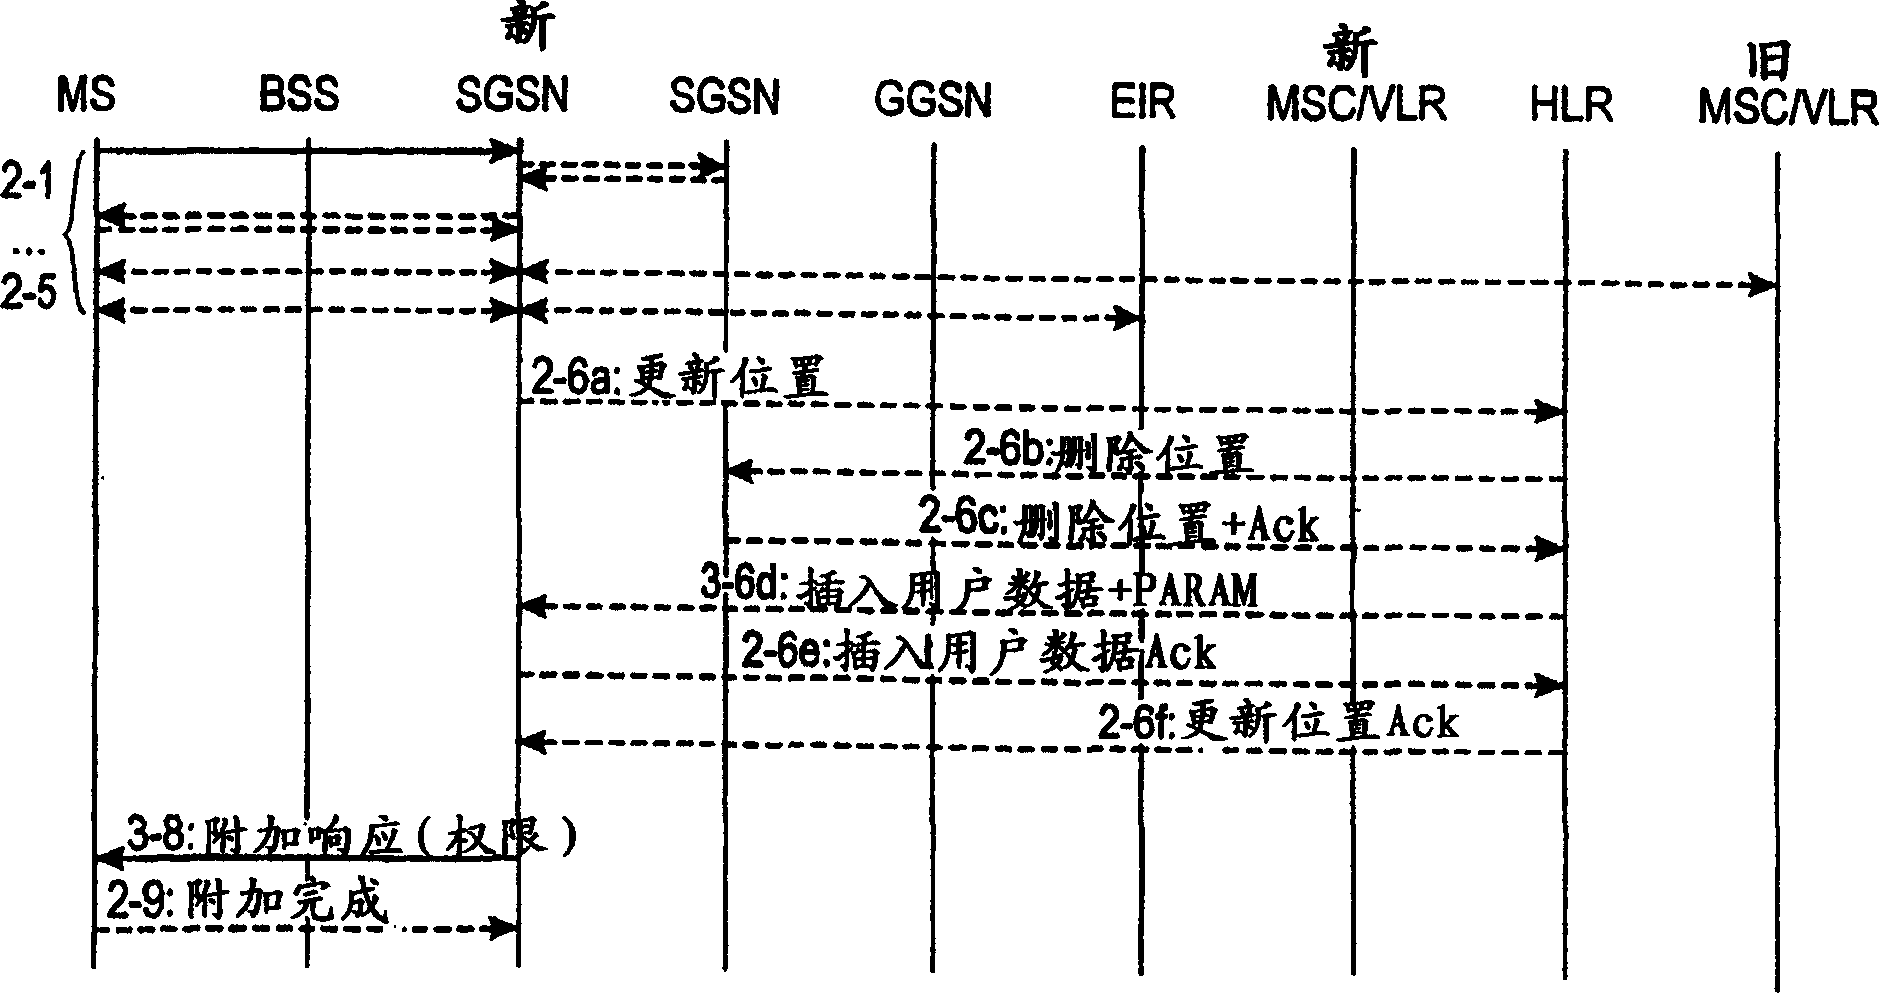 Radio network access mechanism